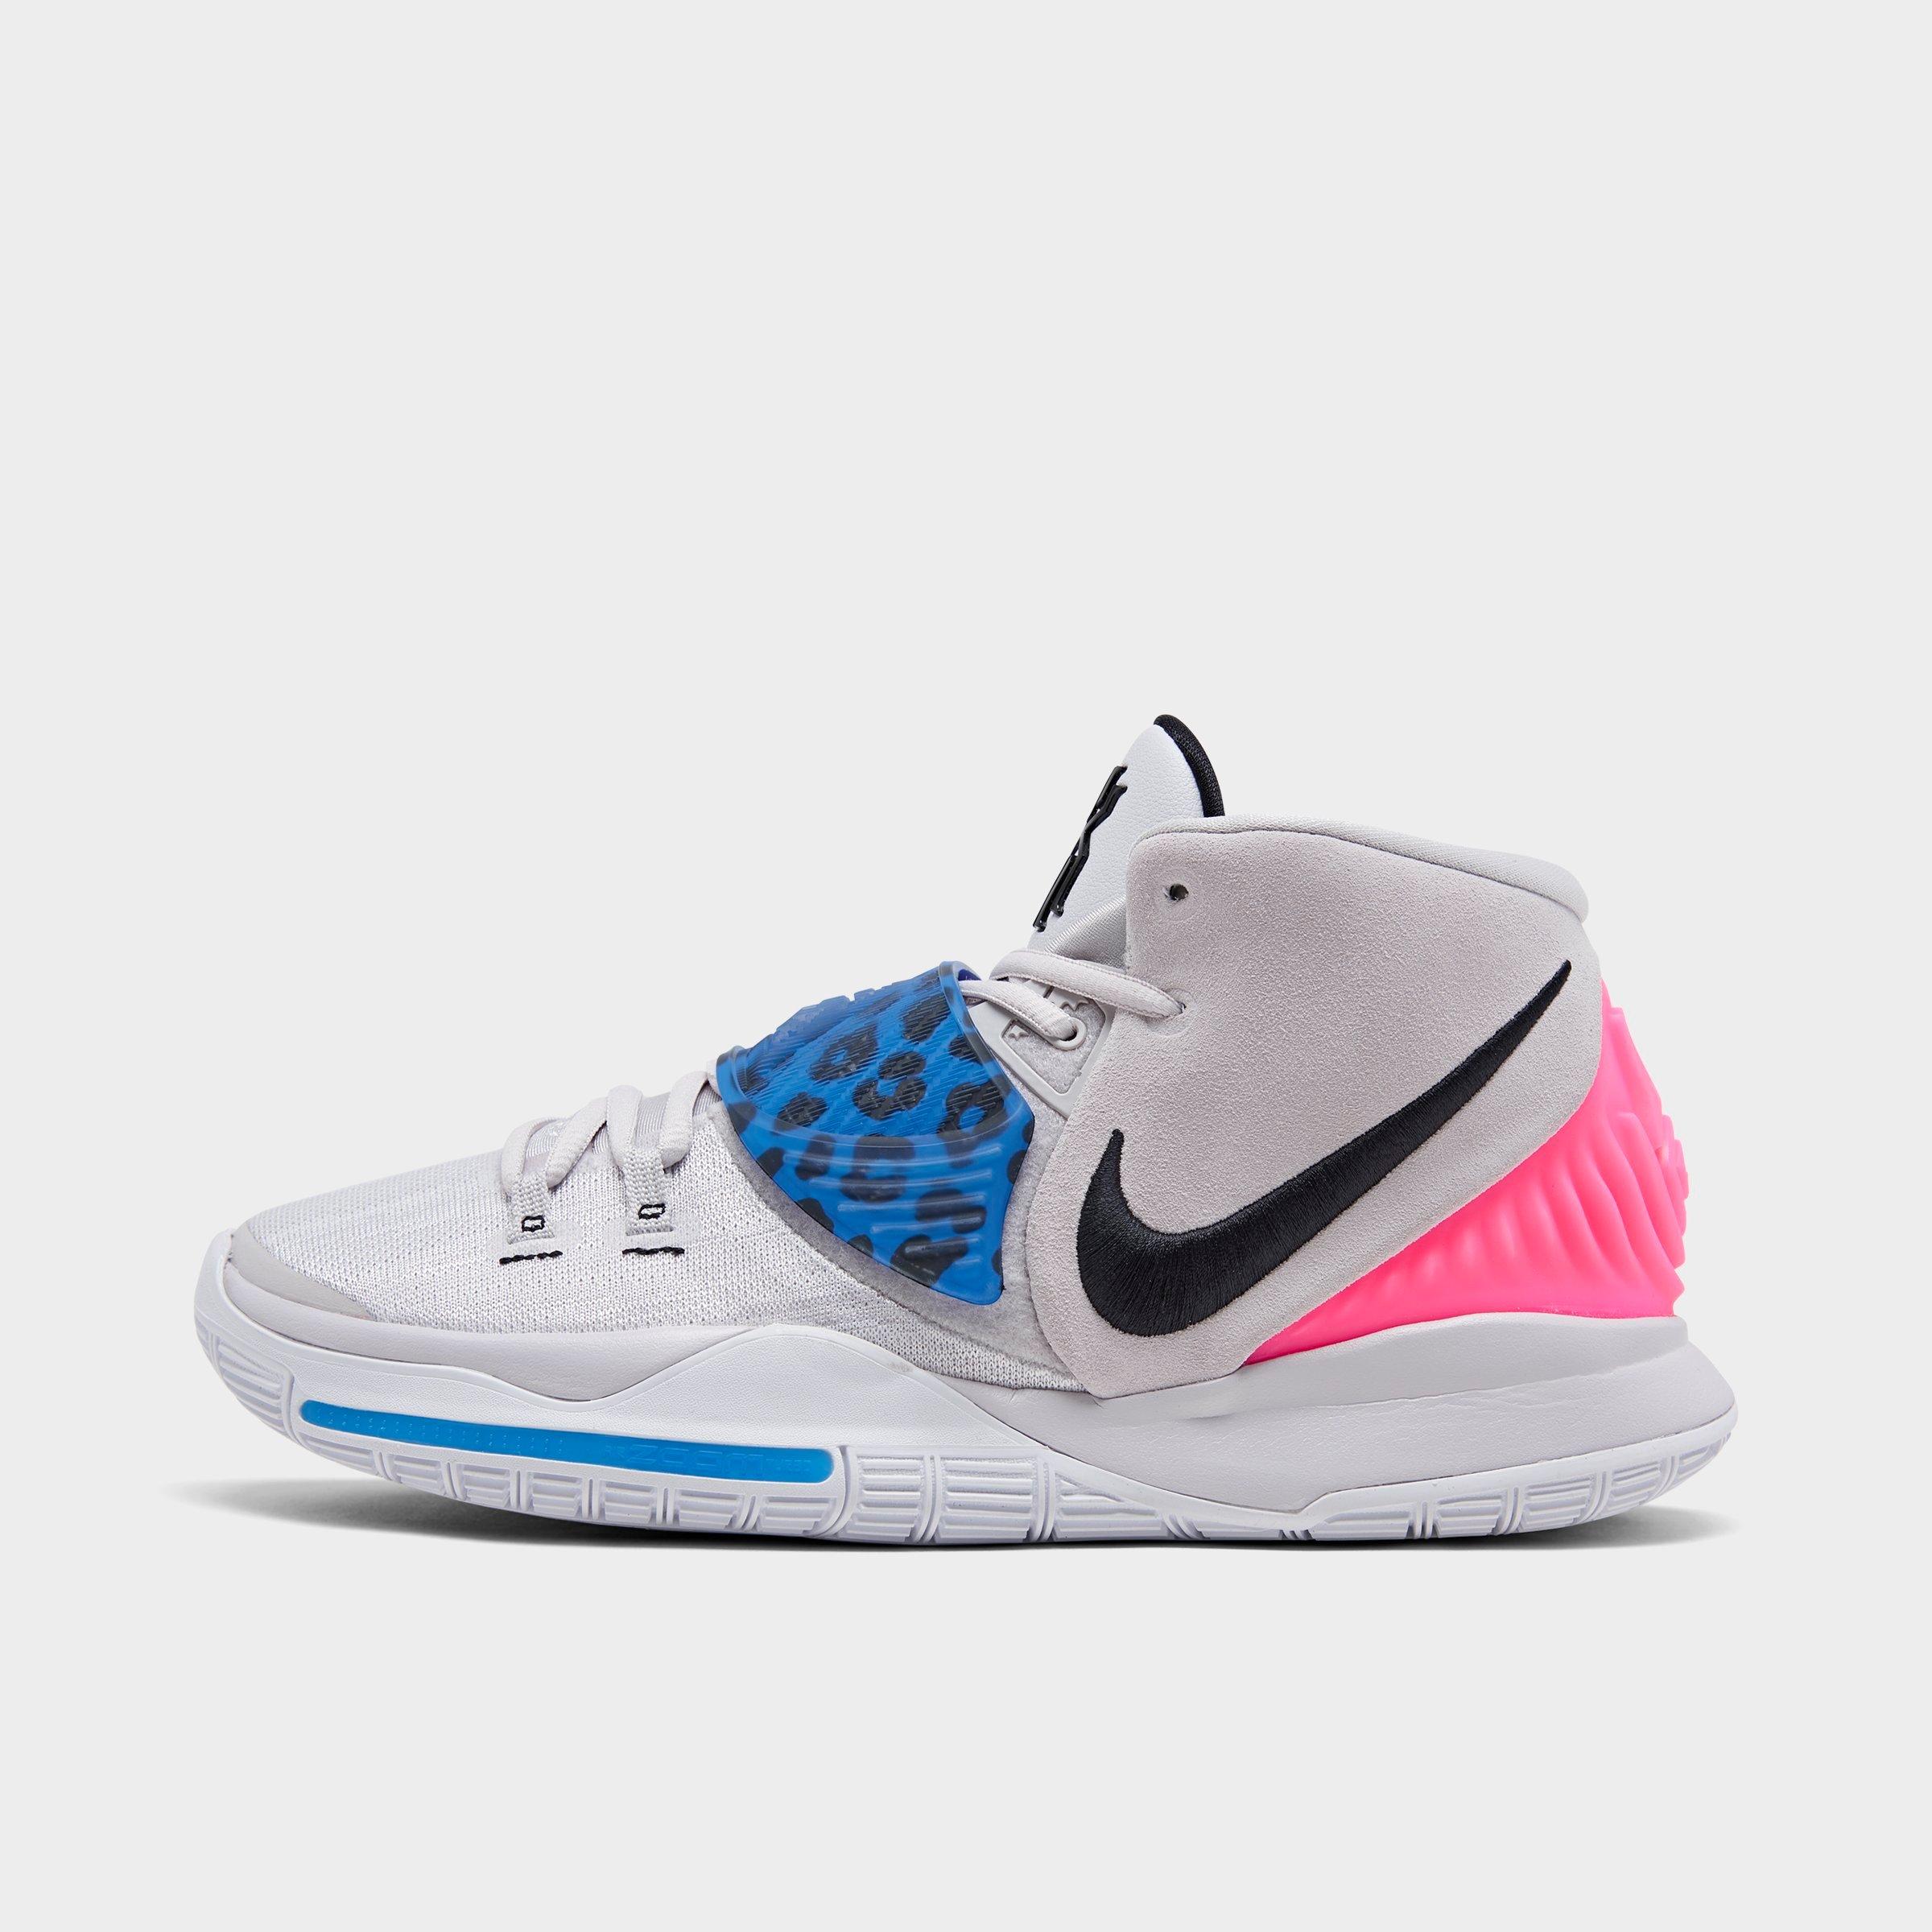 2020 Shoes Nike Kyrie 6 Pre Heat Taipei To Buy 2 Jordans